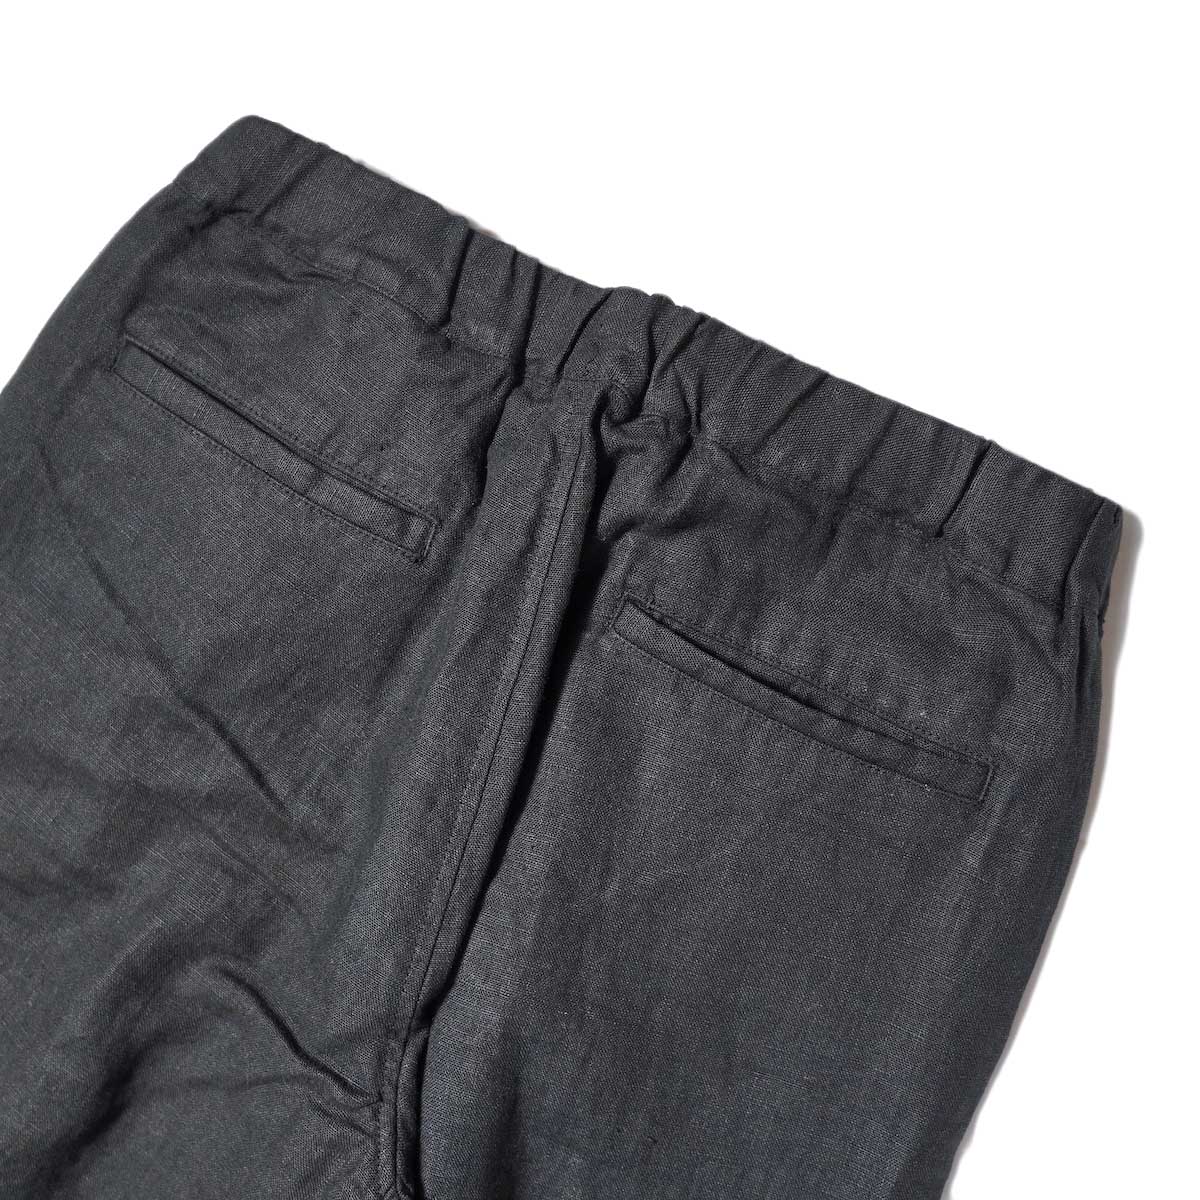 BRENA / Coq Pants - French Linen Canvas (Black) ヒップポケット